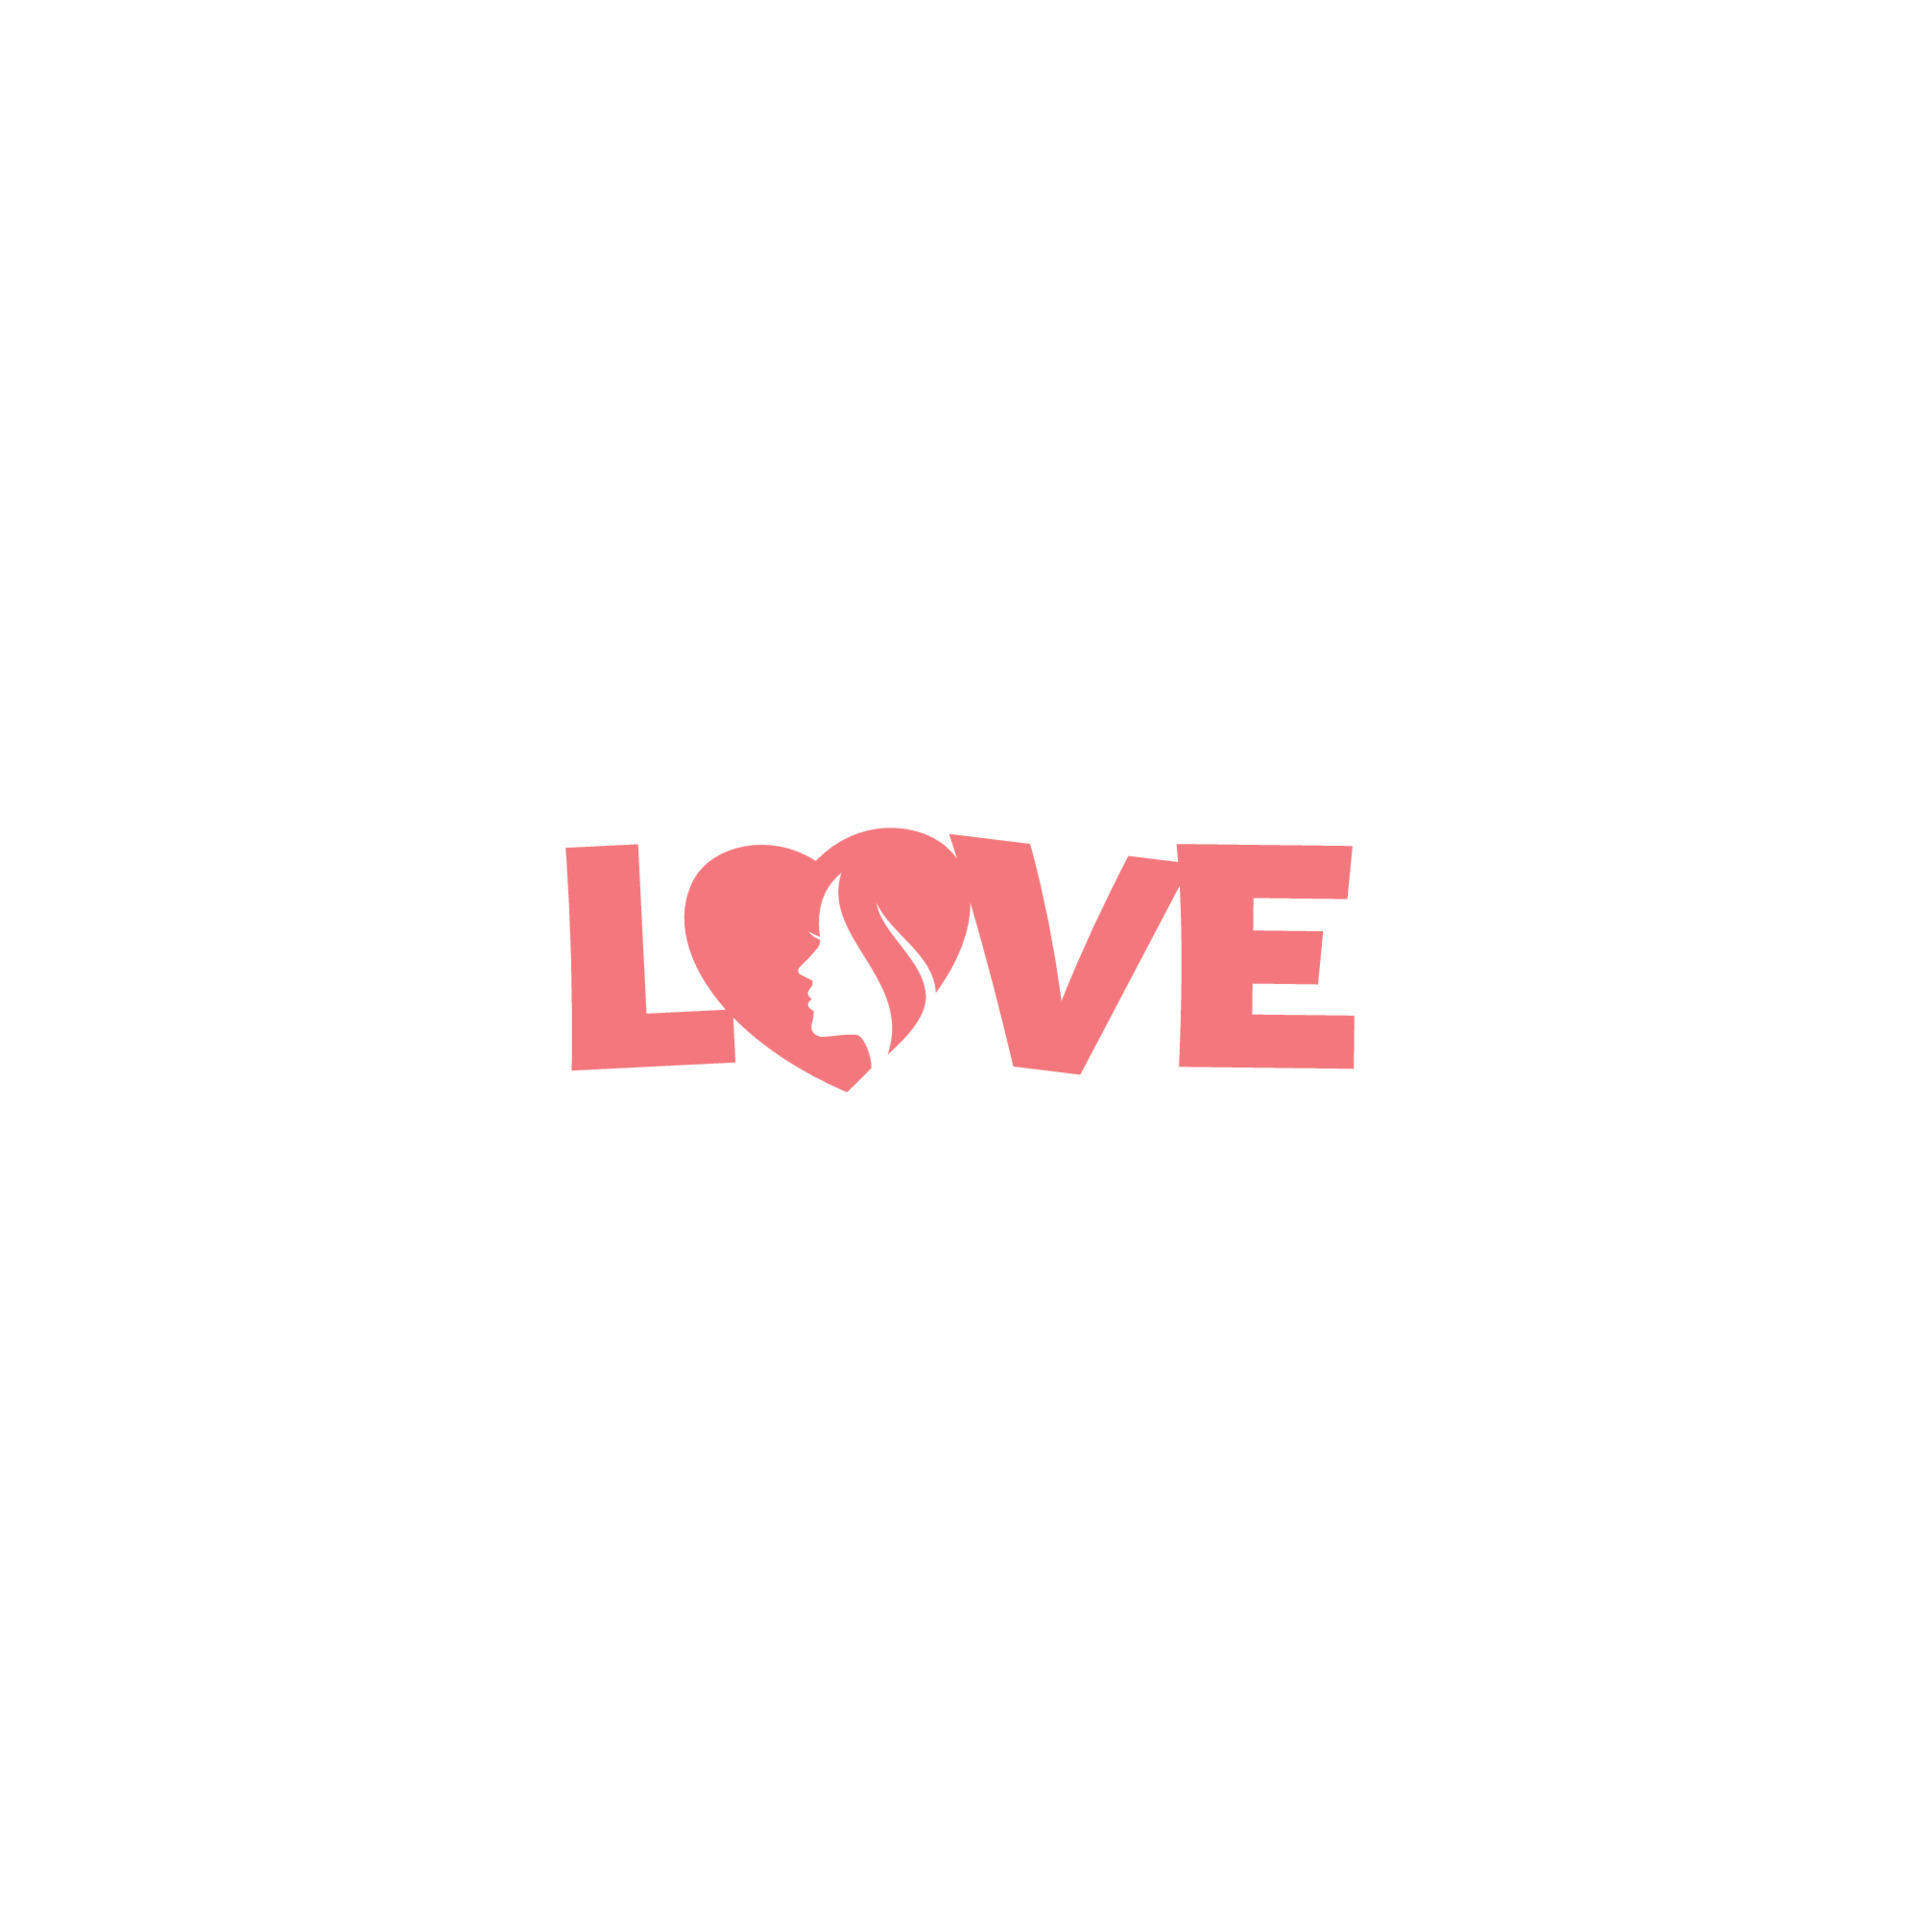 https://static.vecteezy.com/system/resources/previews/004/972/250/original/a-simple-love-wordmark-logo-design-vector.jpg